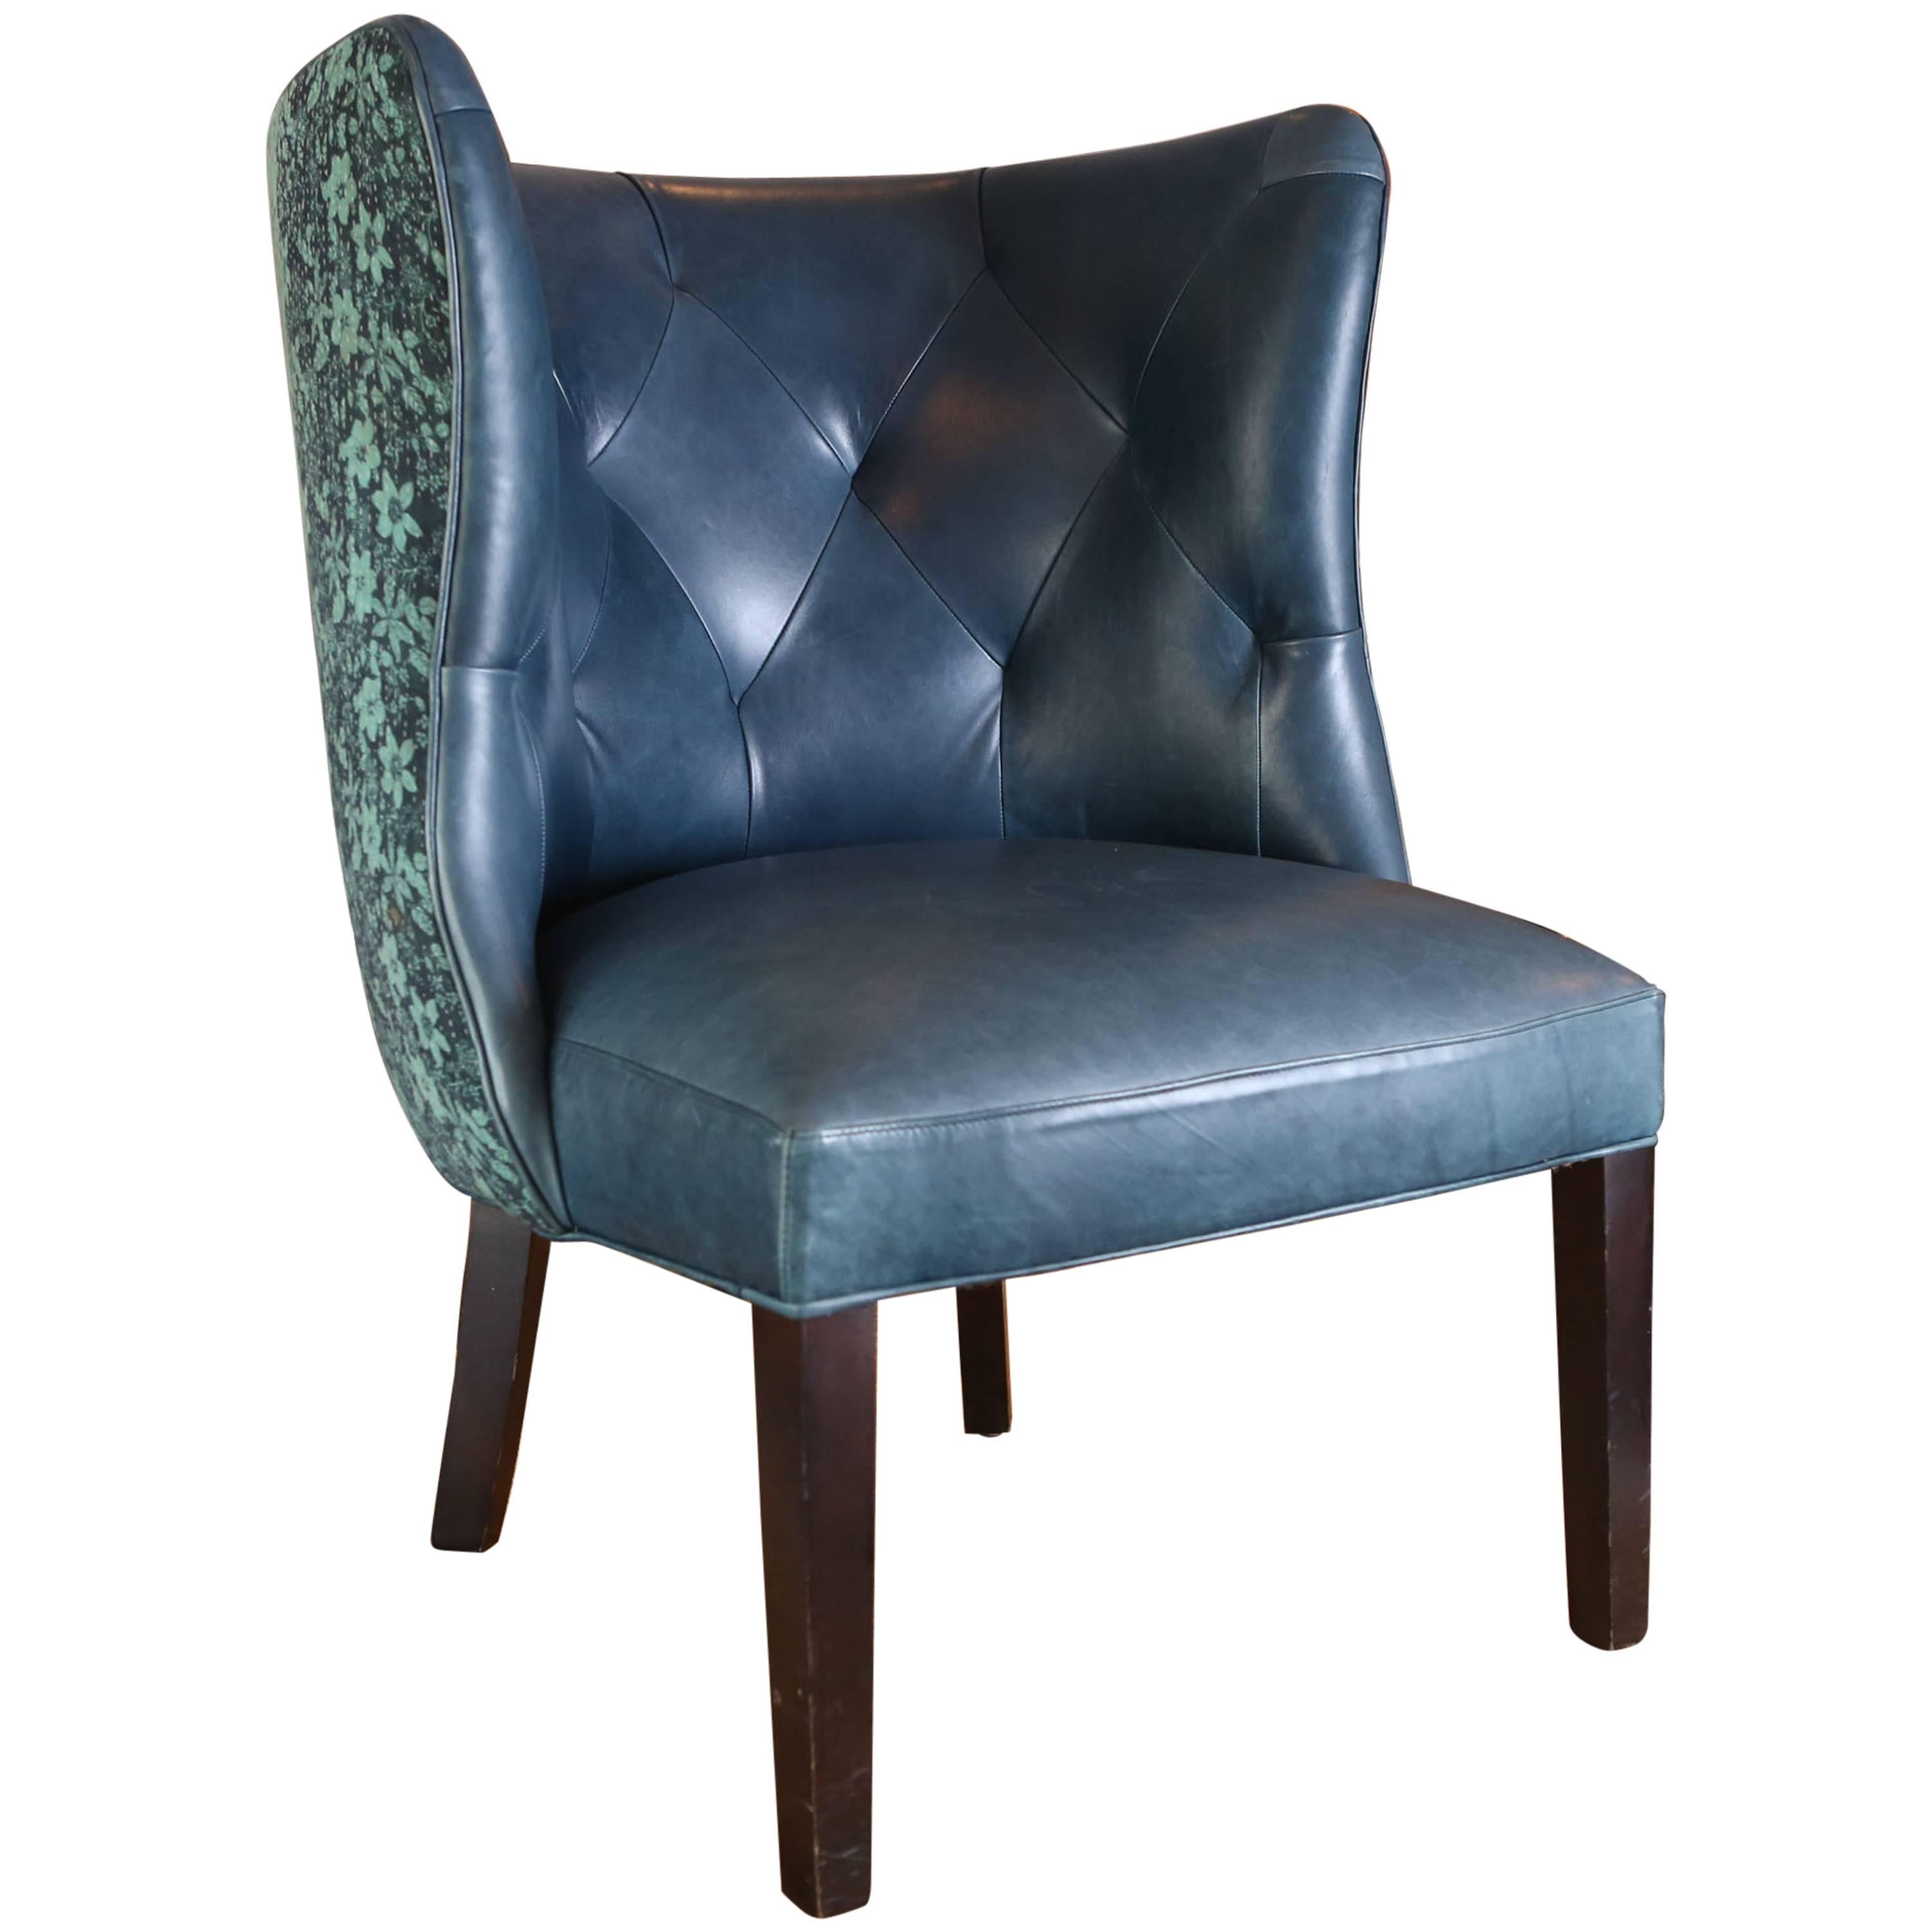 Goodman Tibetan Upholstered Leather Chair